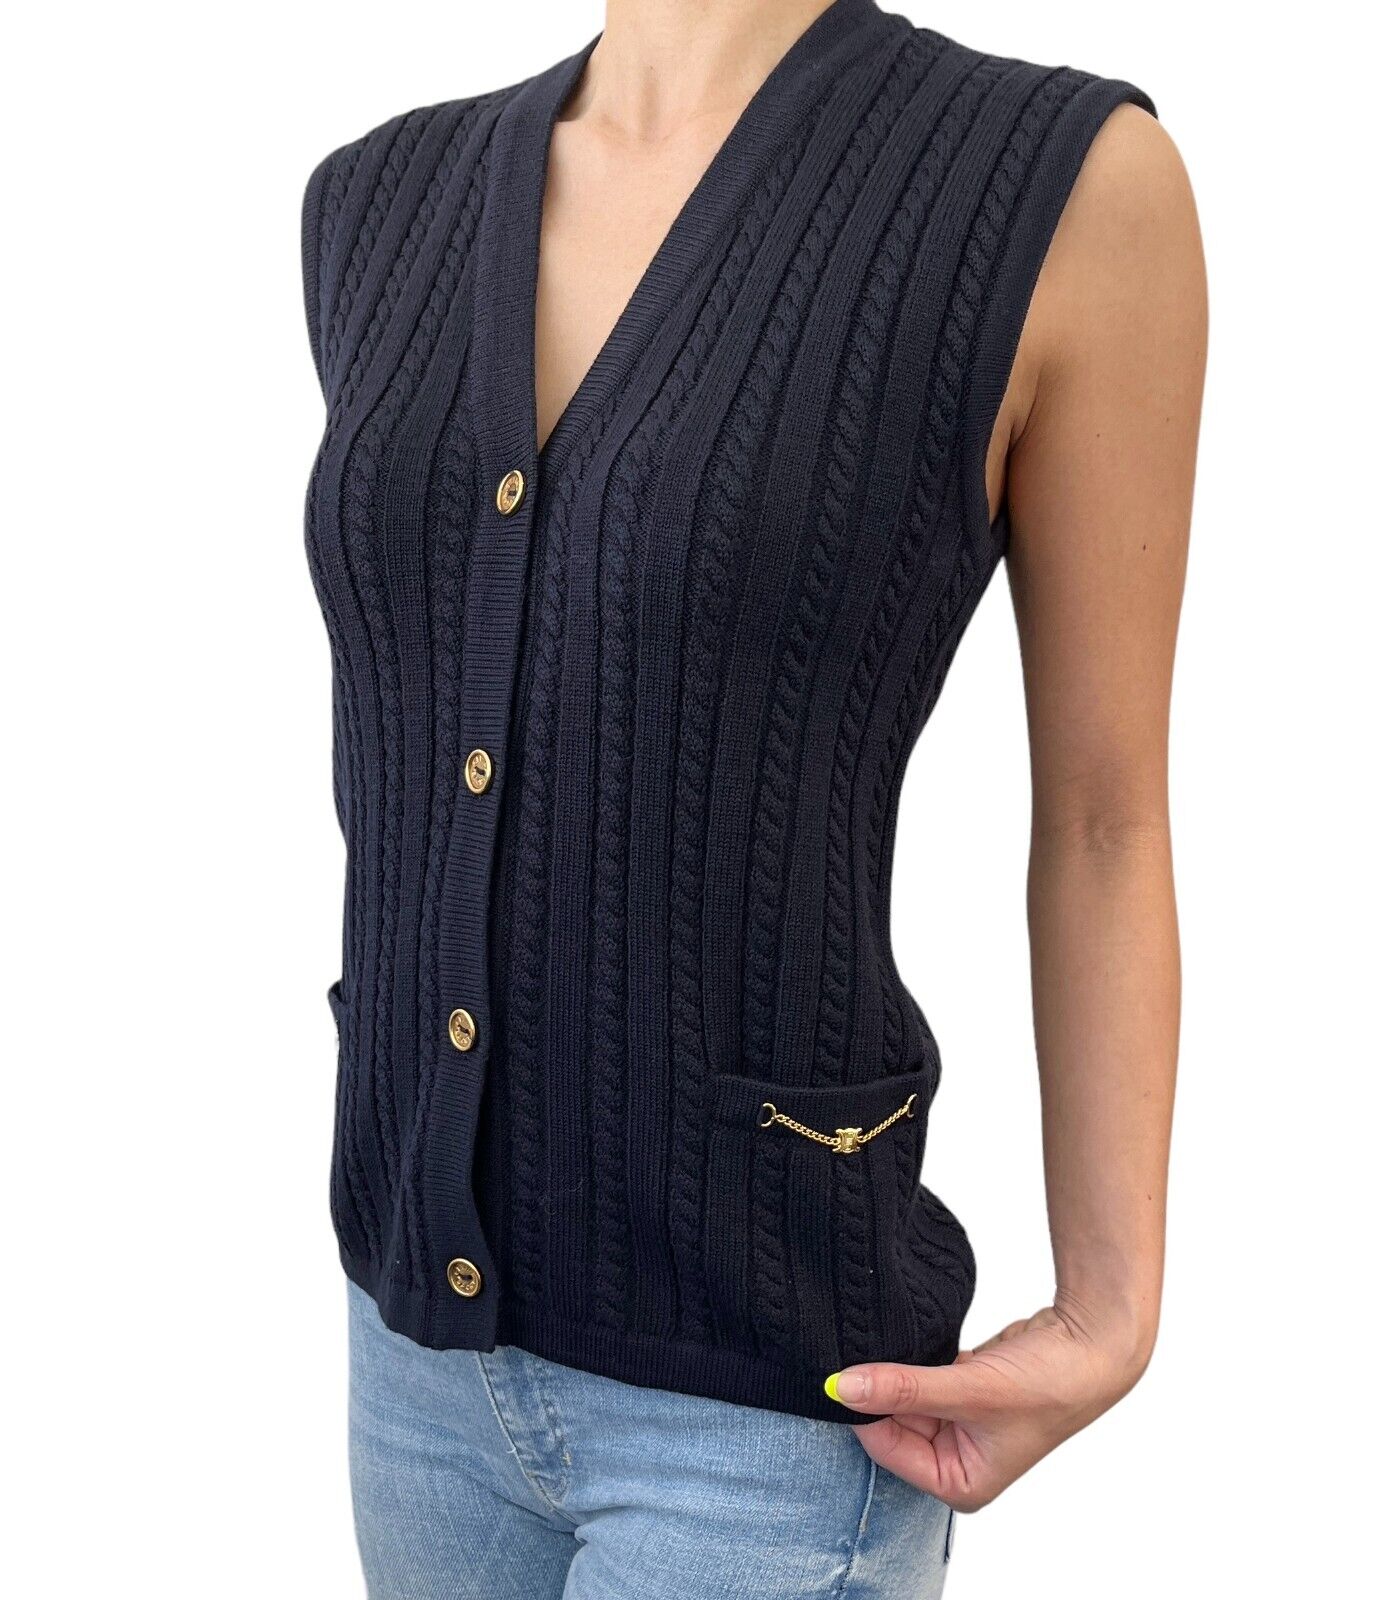 CELINE Vintage Logo Charm Knit Vest Sweater #38 Button Dark Blue Gold Rank AB+